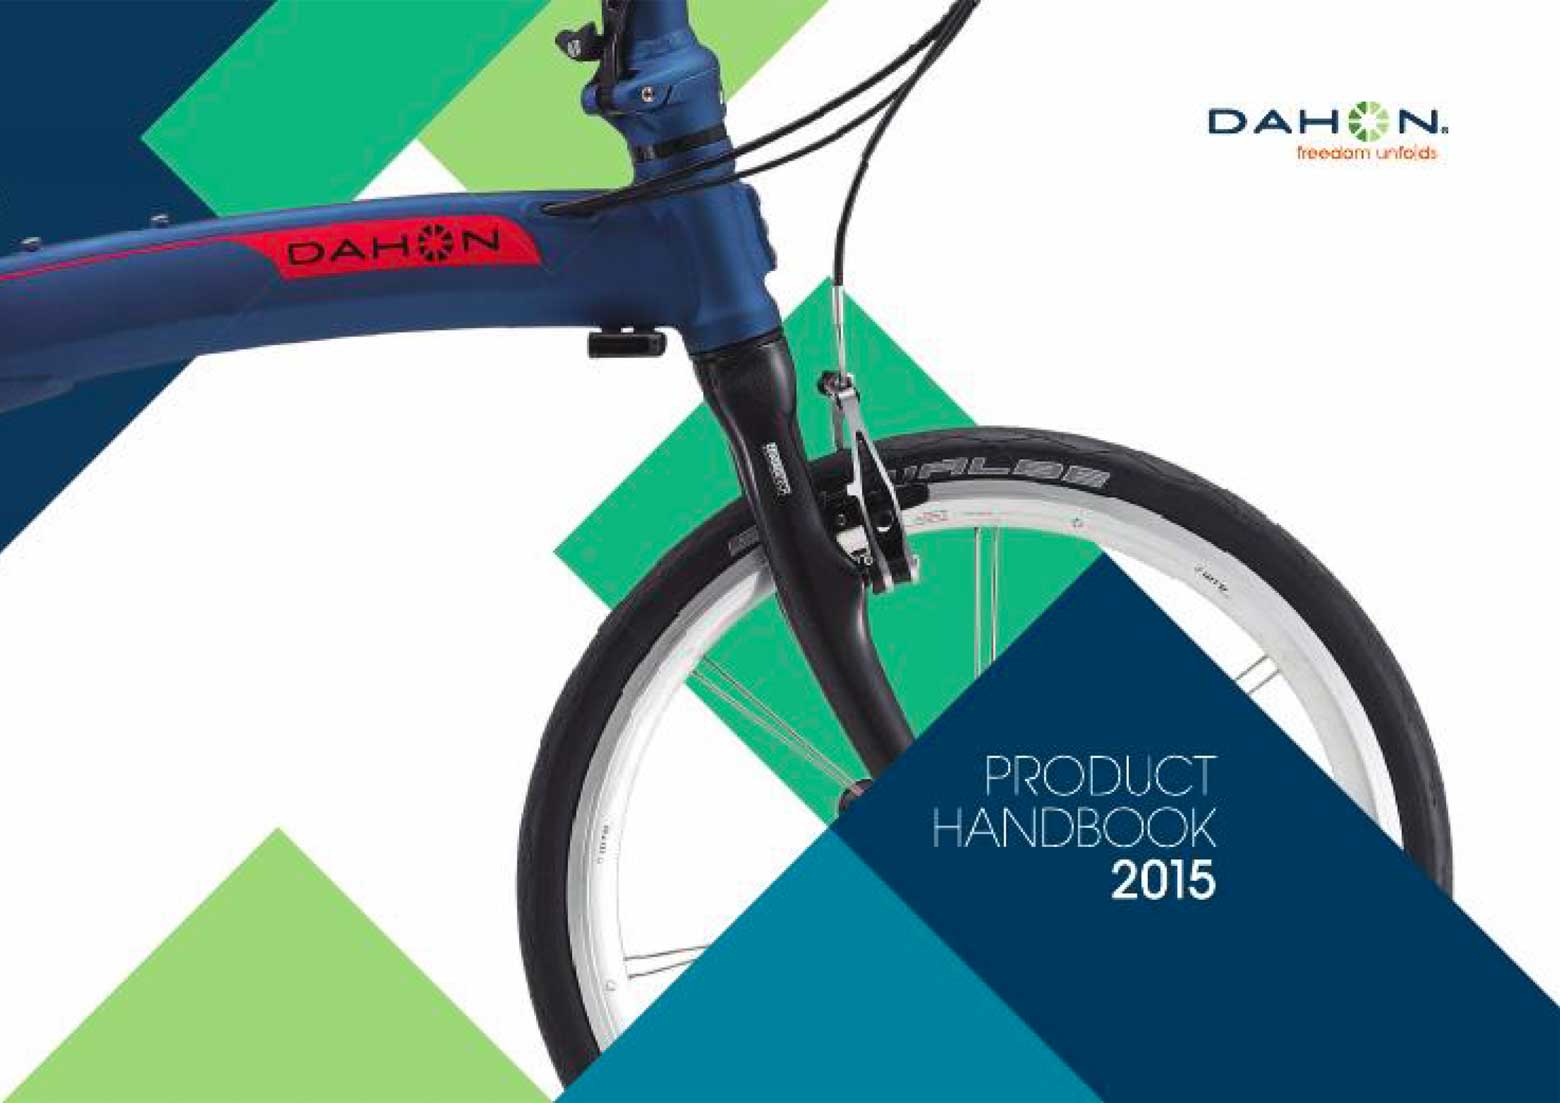 Dahon Product Handbook 2015 - front cover main image